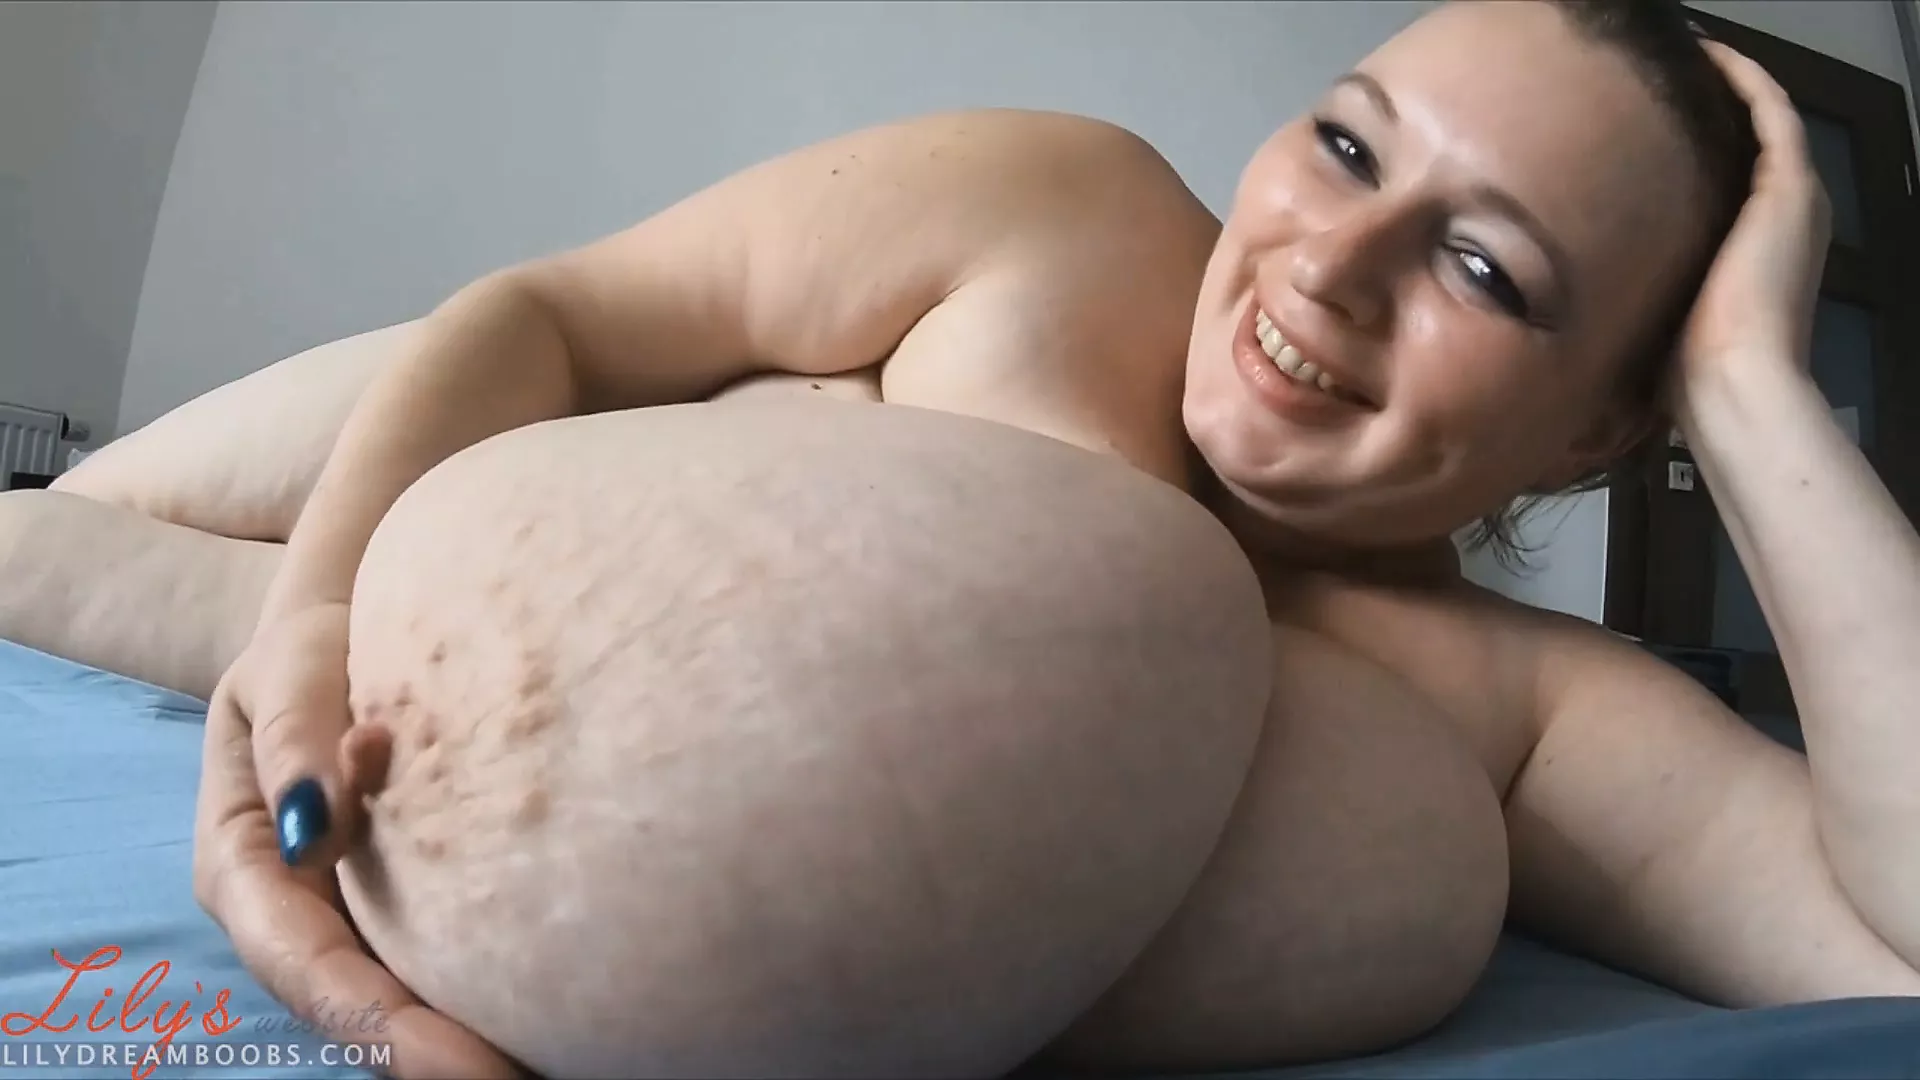 bev ferris add worlds largest boobs nude photo